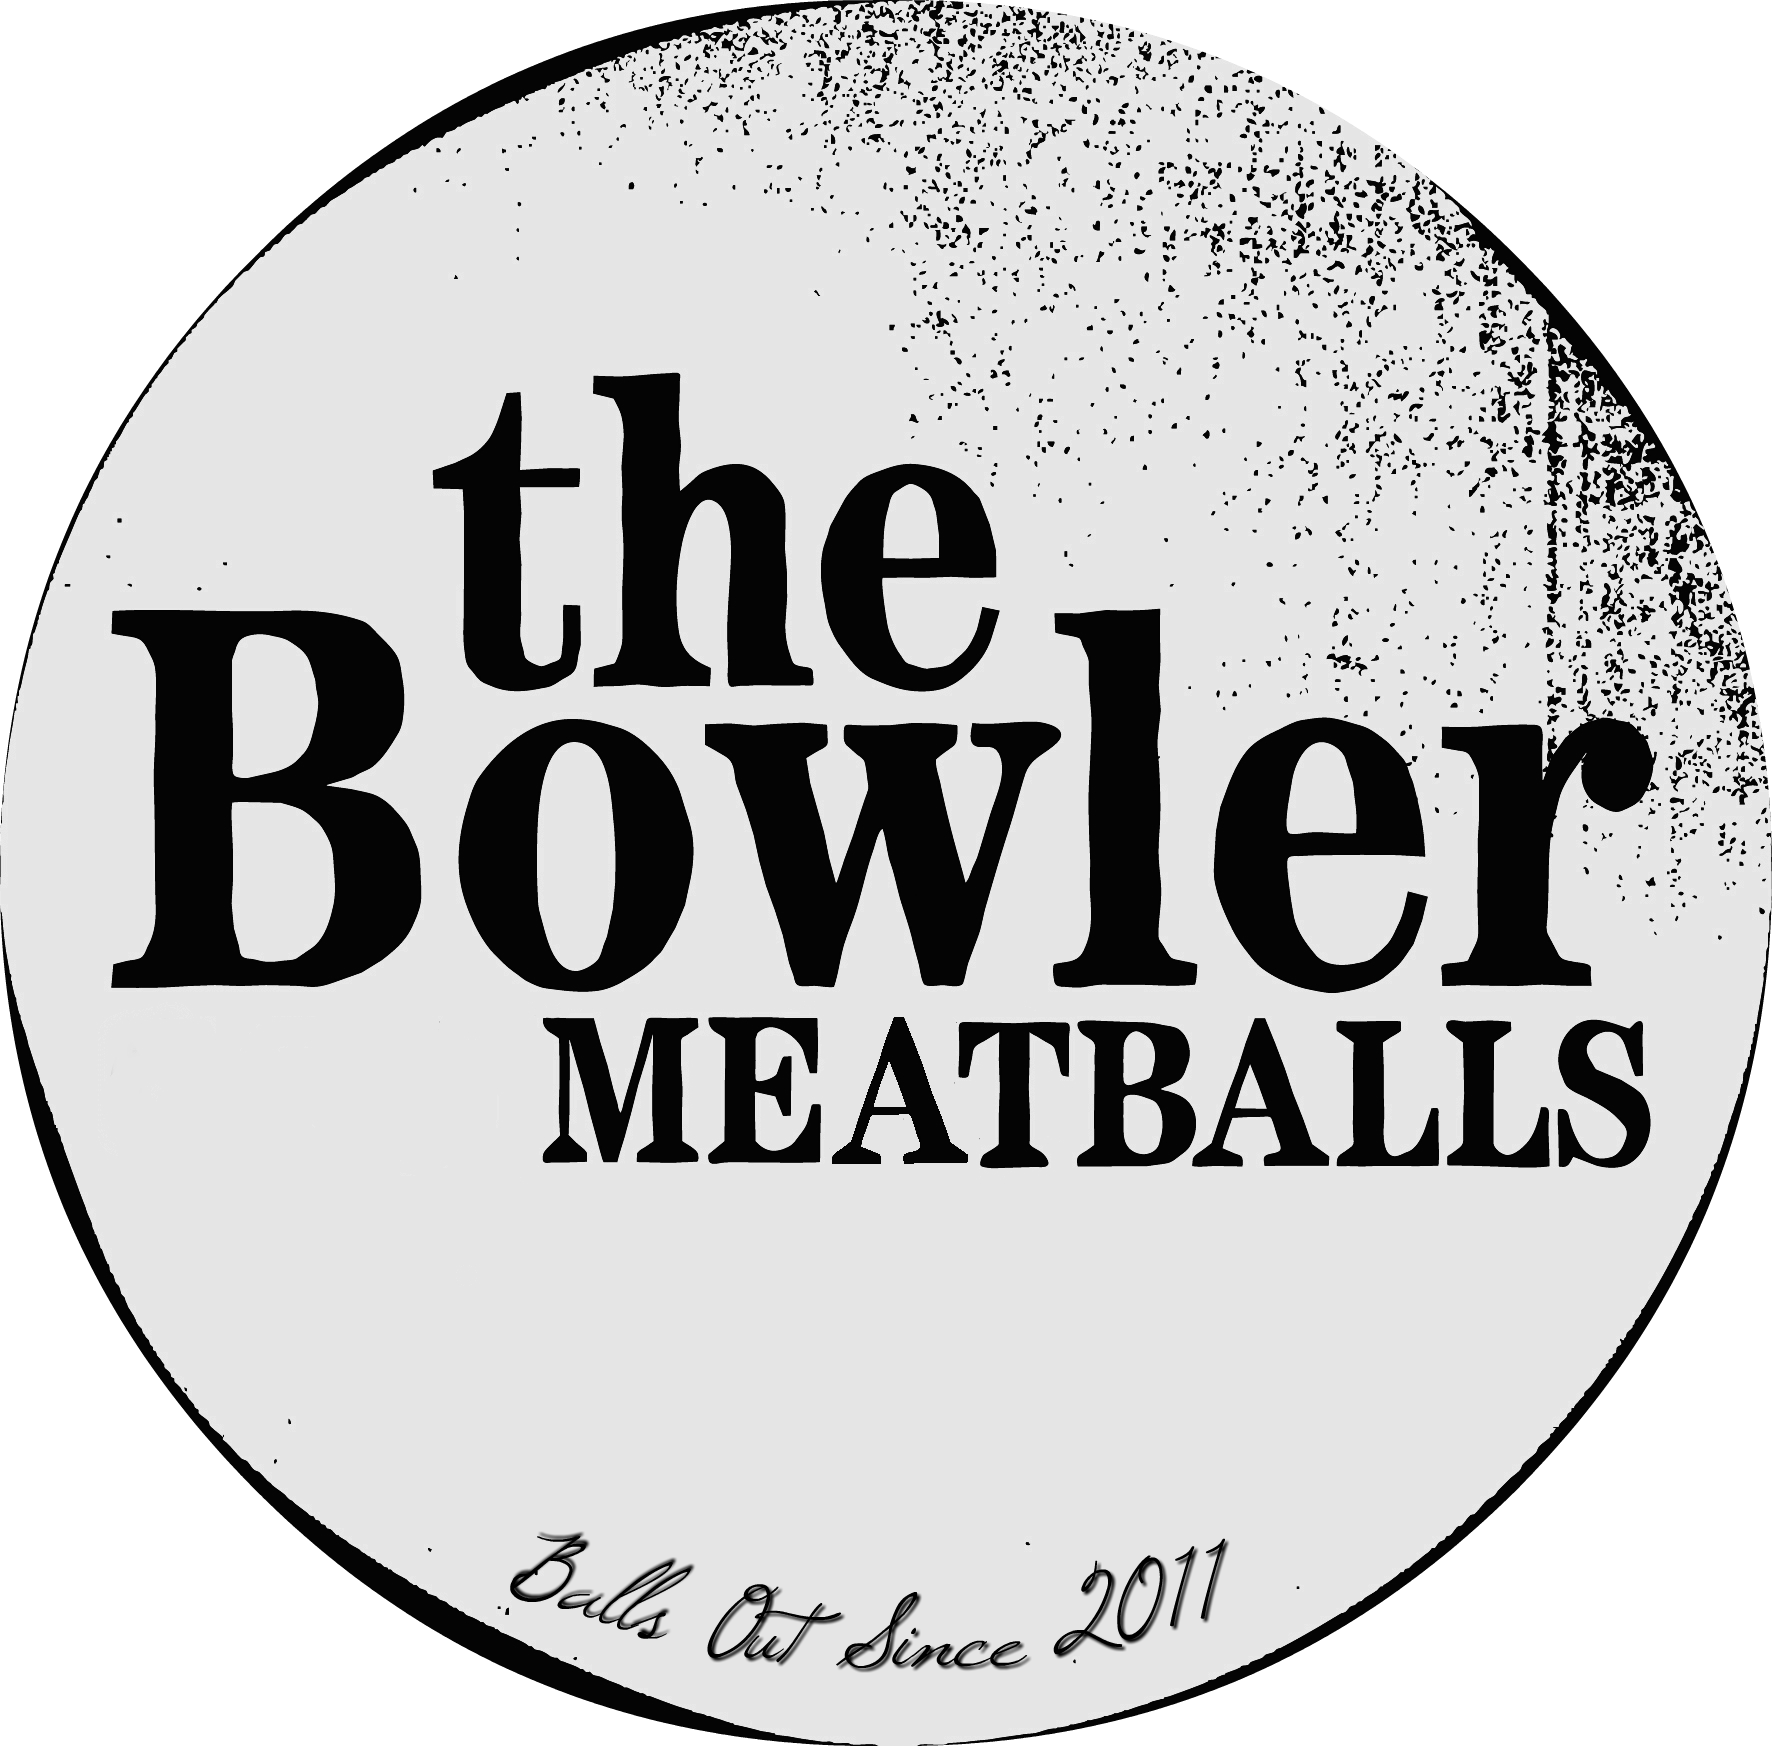 The Bowler Meatballs